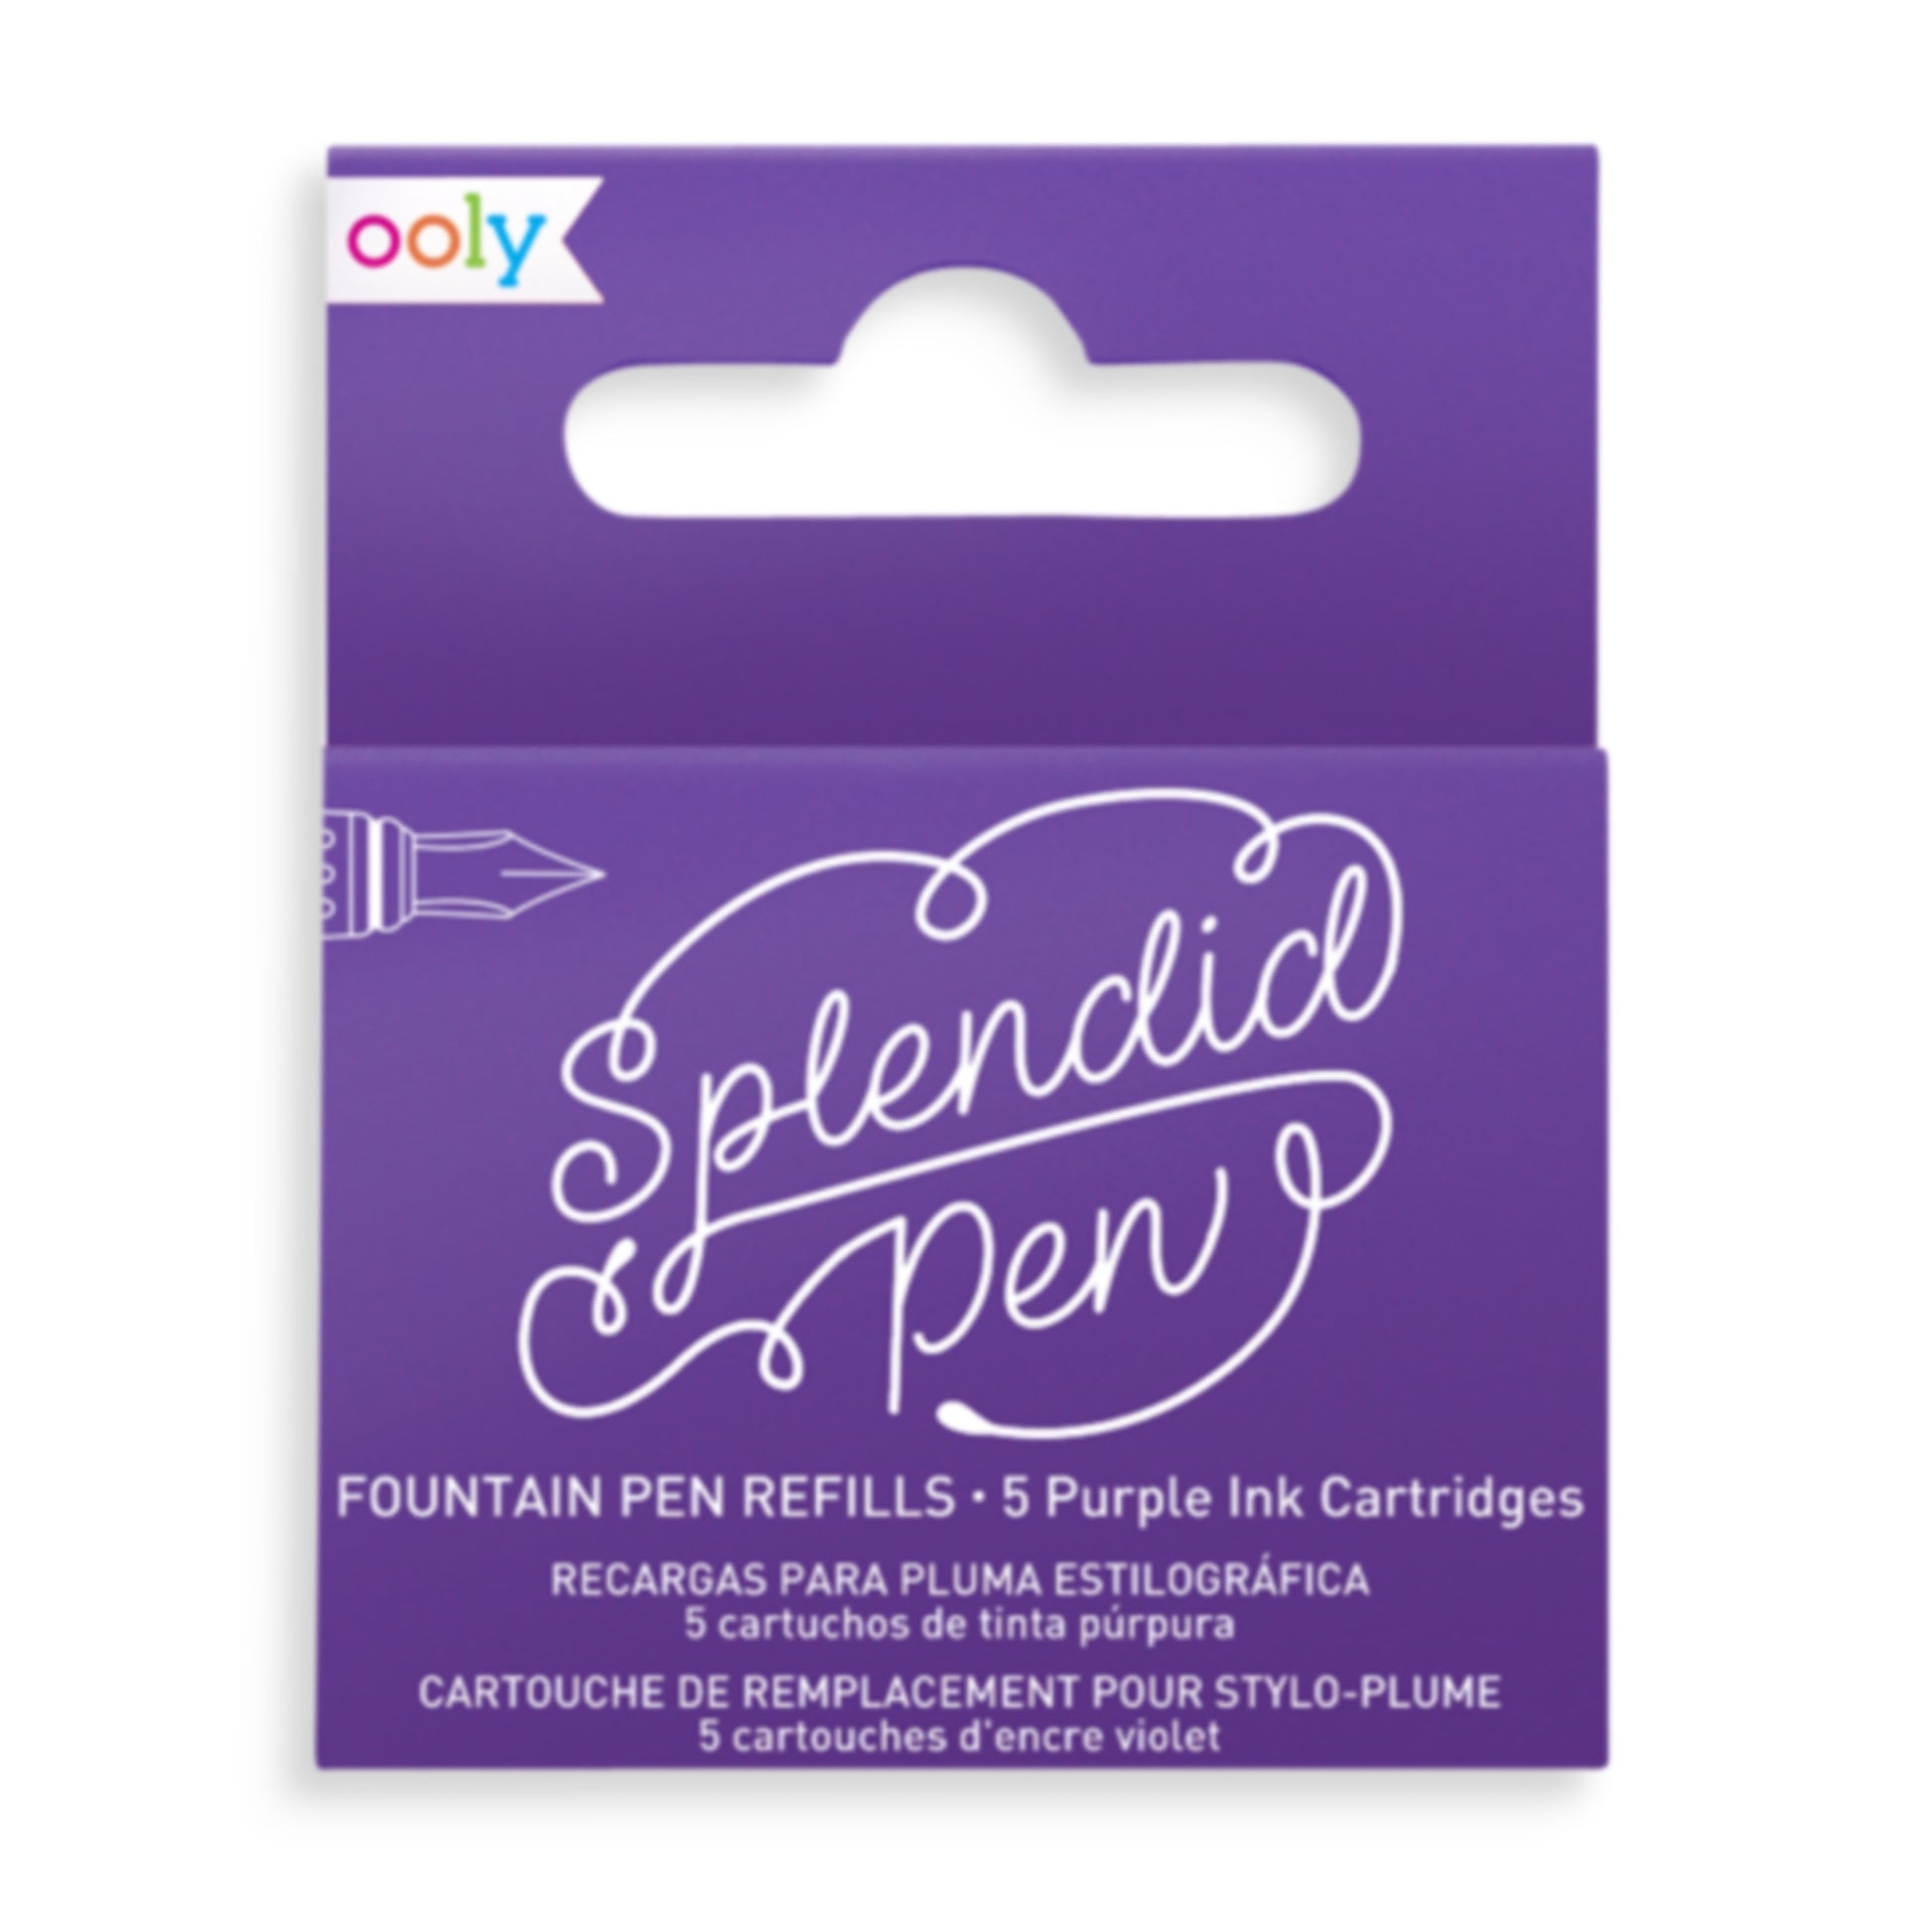 Ooly Splendid Fountain Pen Ink Refills - Purple by Ooly - K. A. Artist Shop